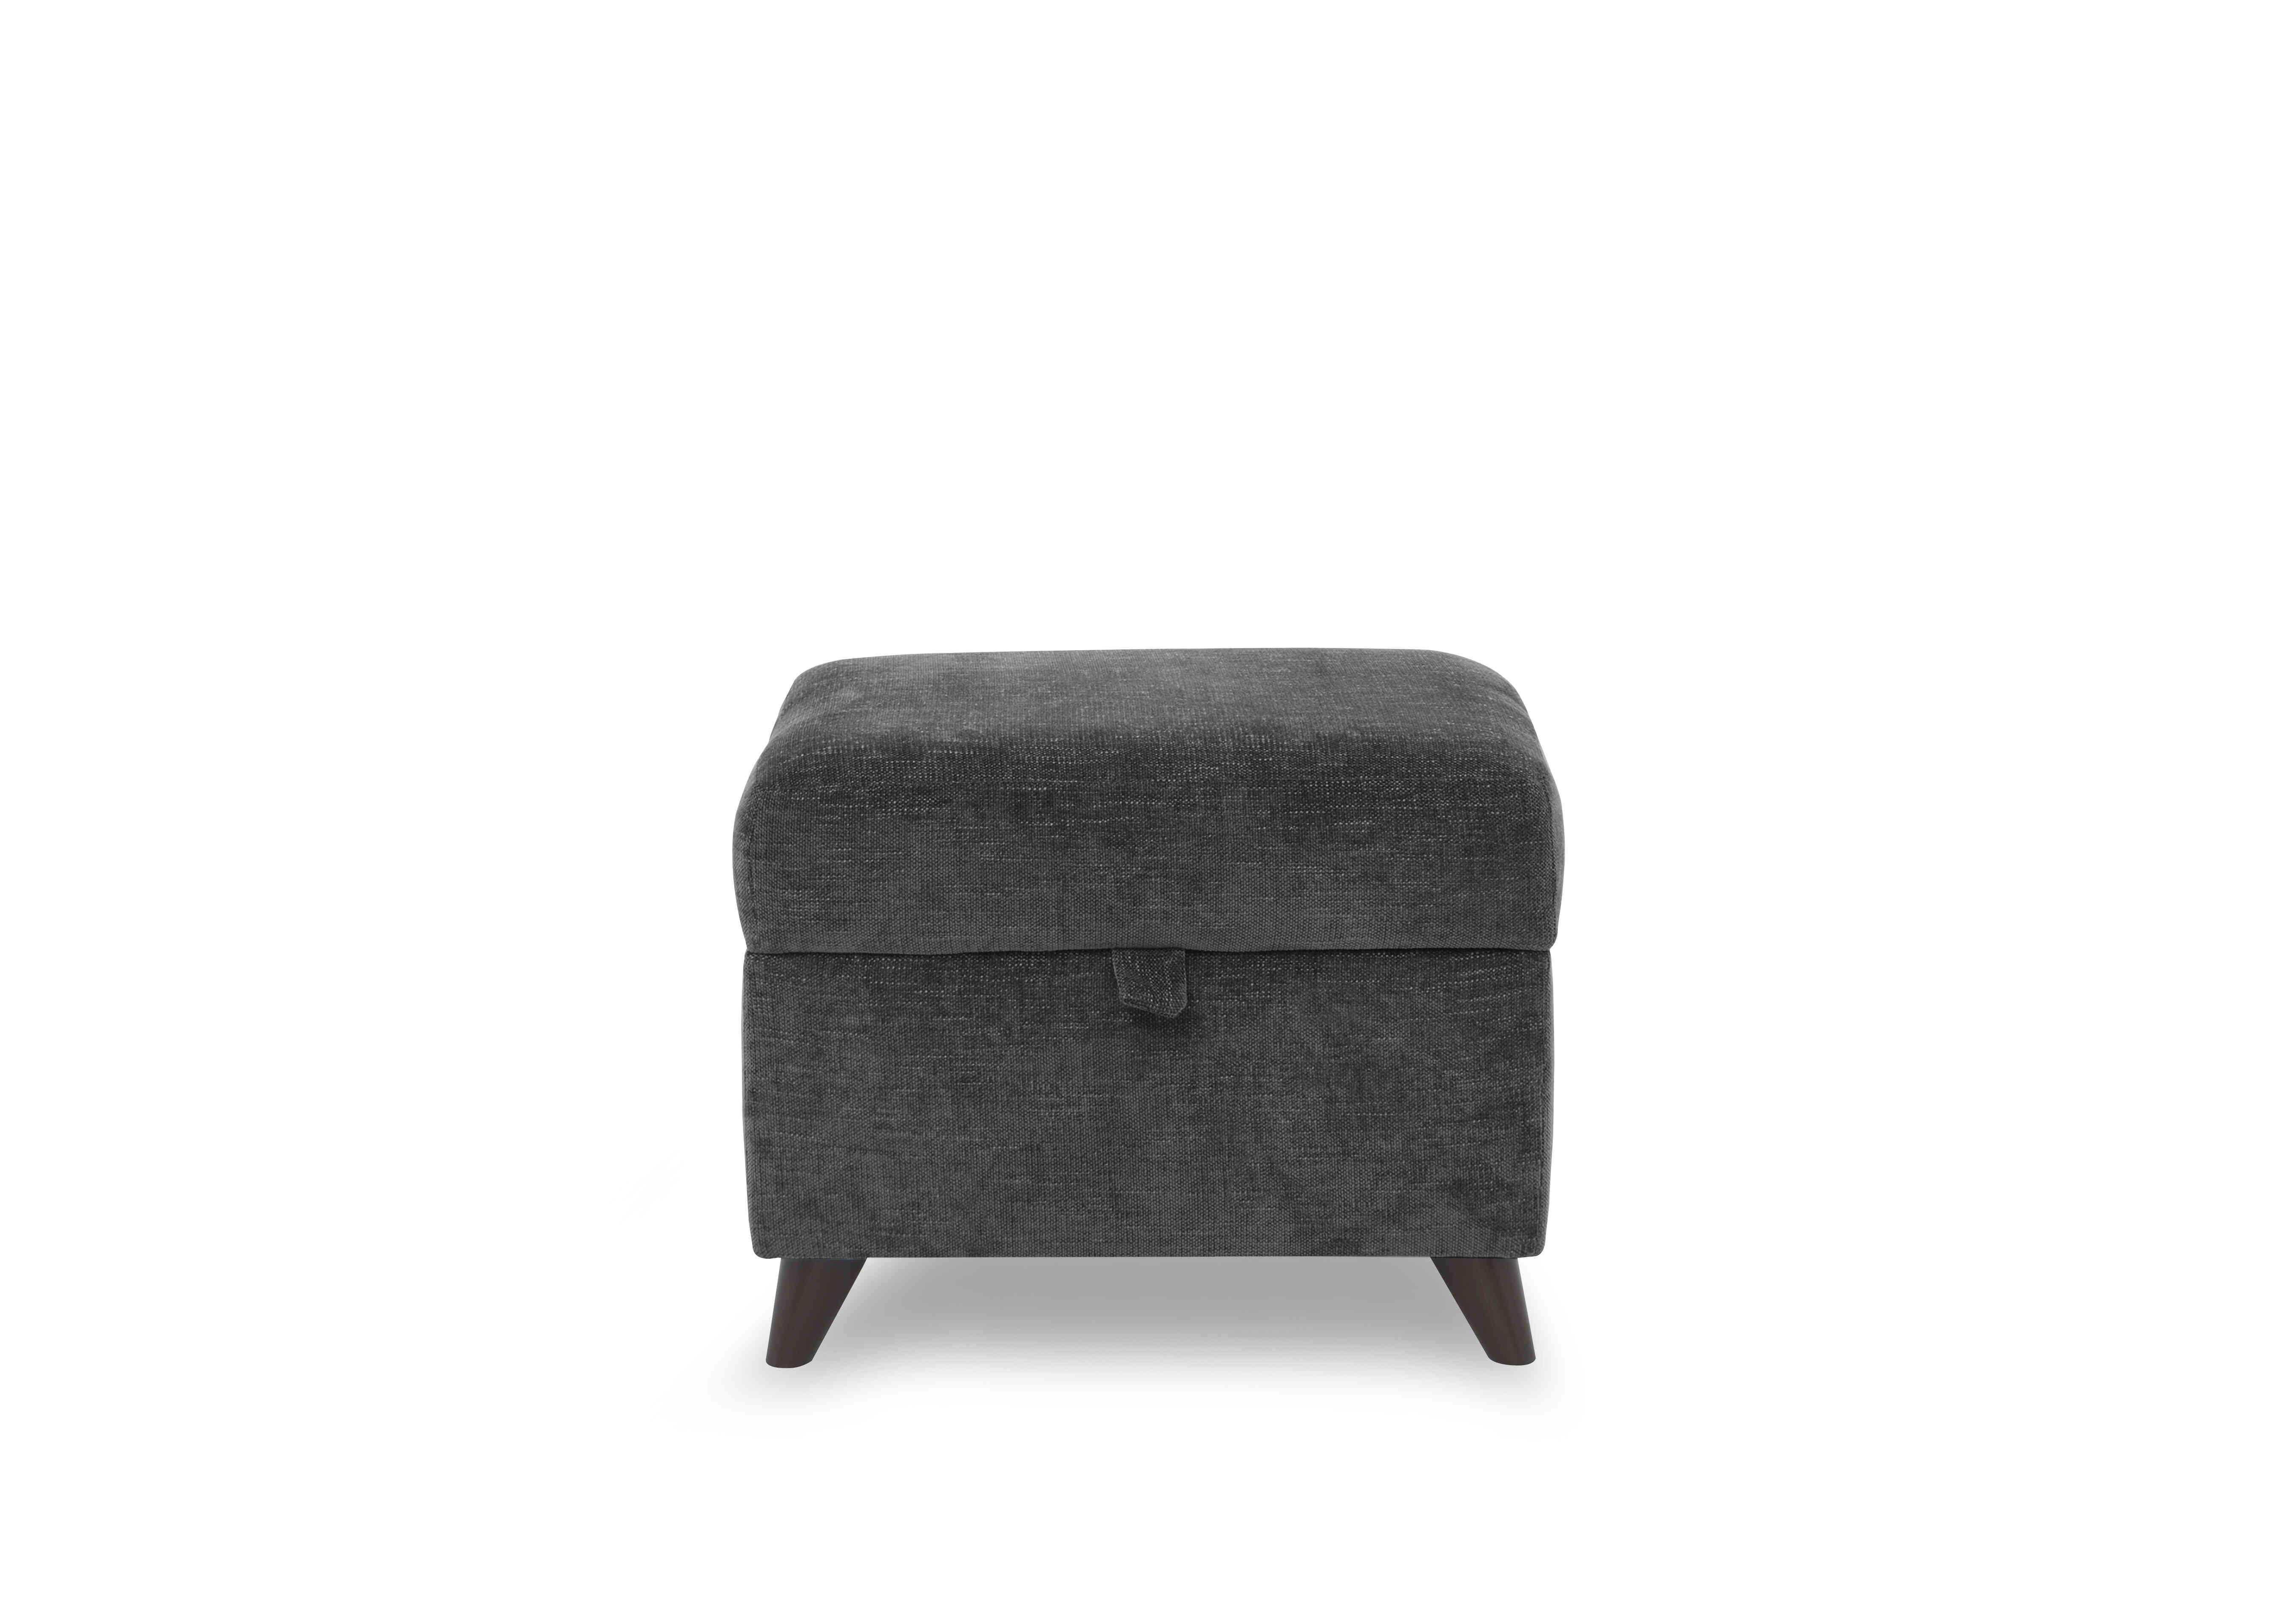 Sofia Fabric Storage Footstool in Marlon Nero Wf on Furniture Village